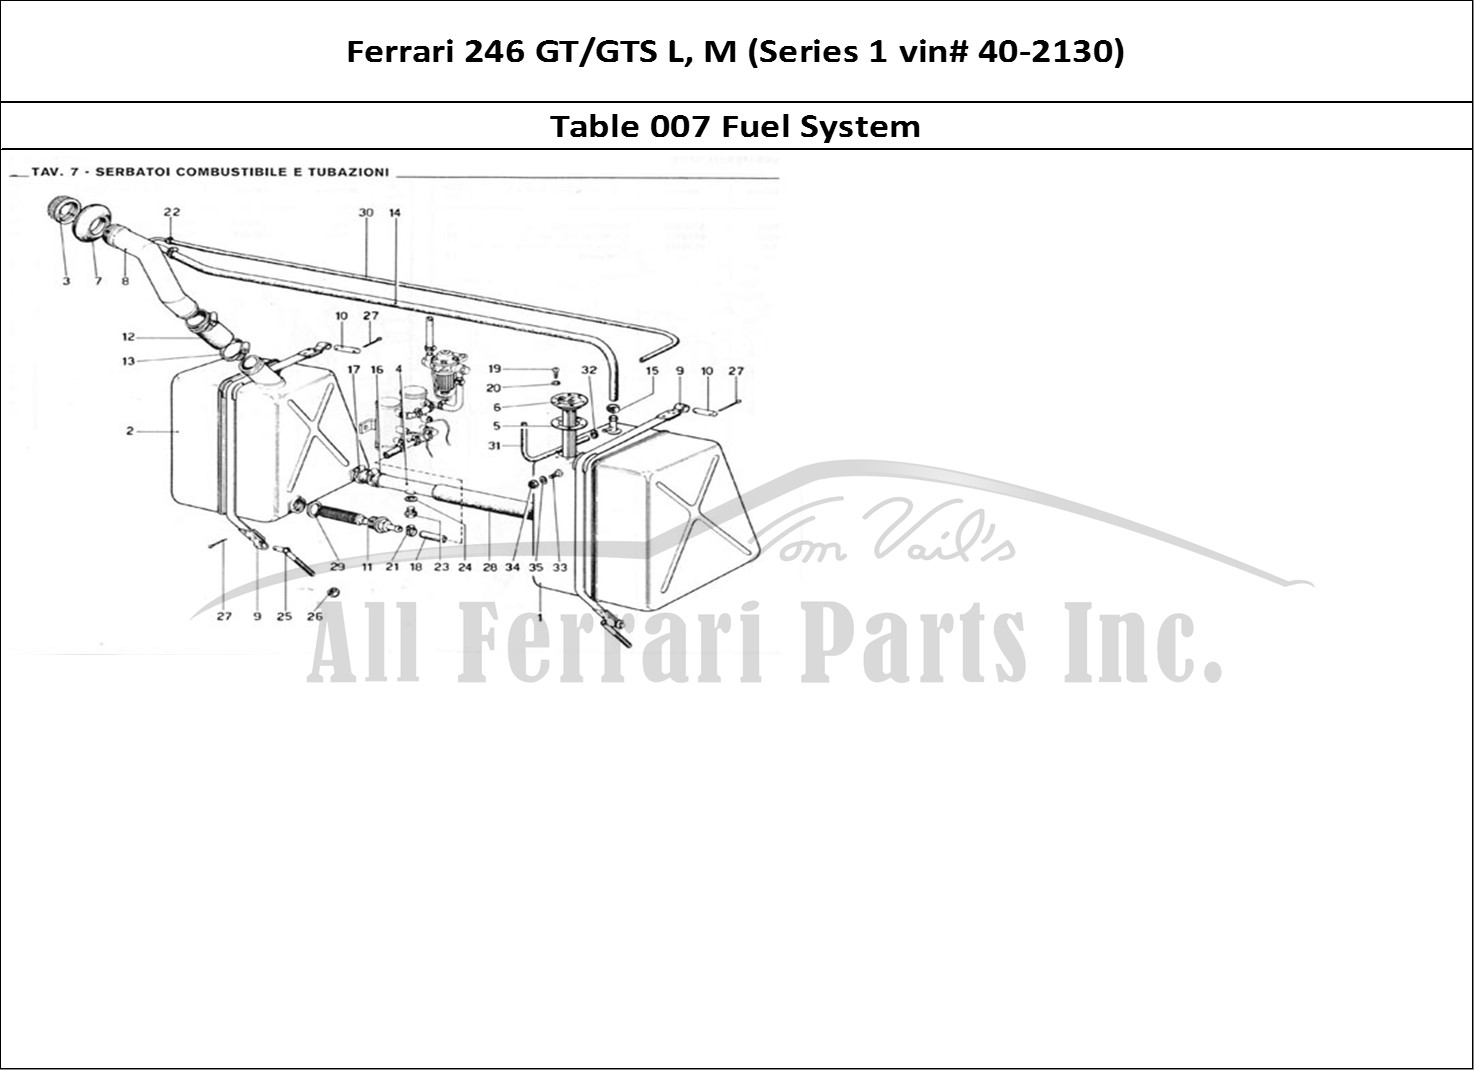 Ferrari Parts Ferrari 246 GT Series 1 Page 007 Fuel System